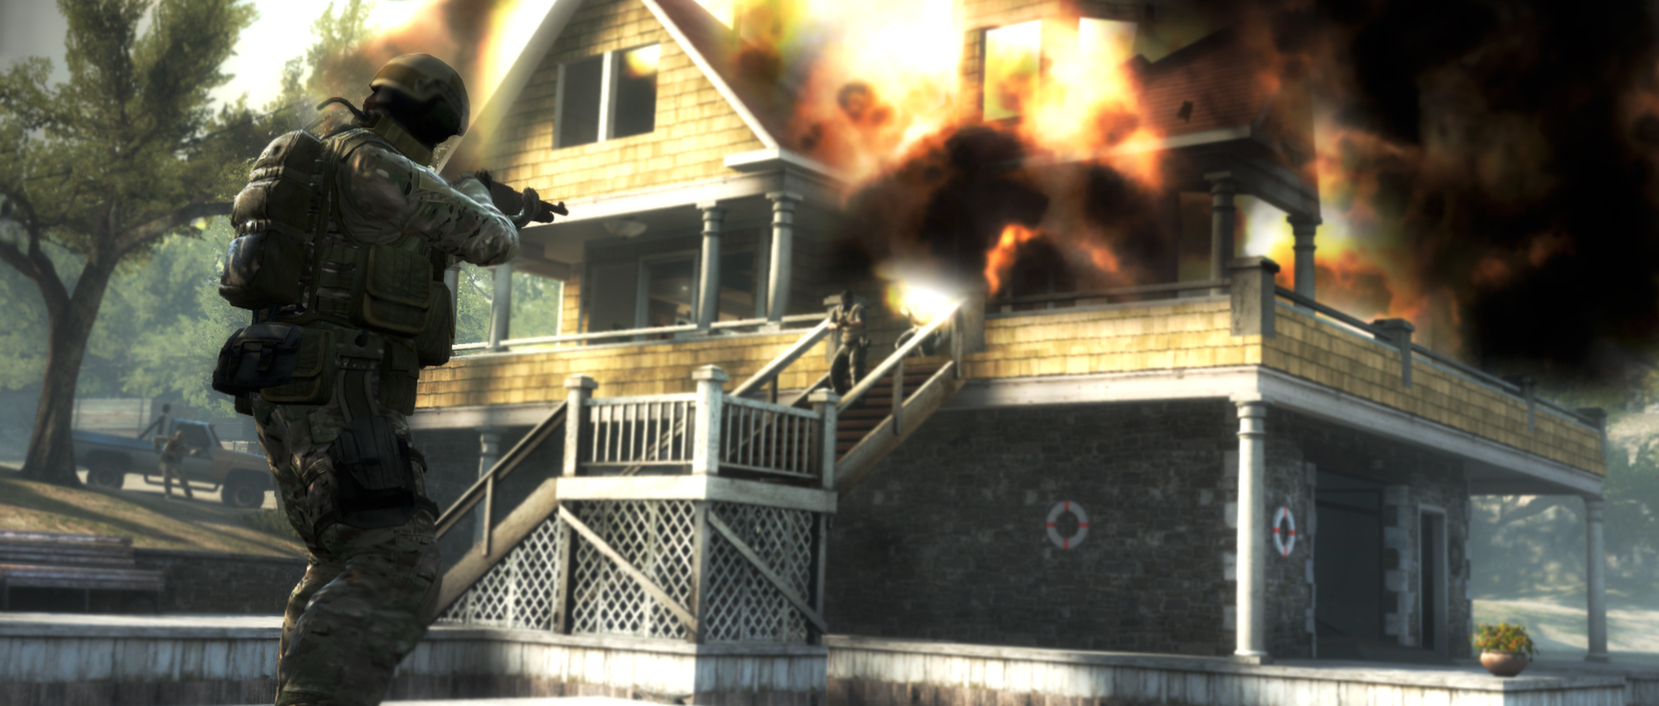 Скриншот 2 к игре Counter-Strike: Global Offensive (CS: GO)